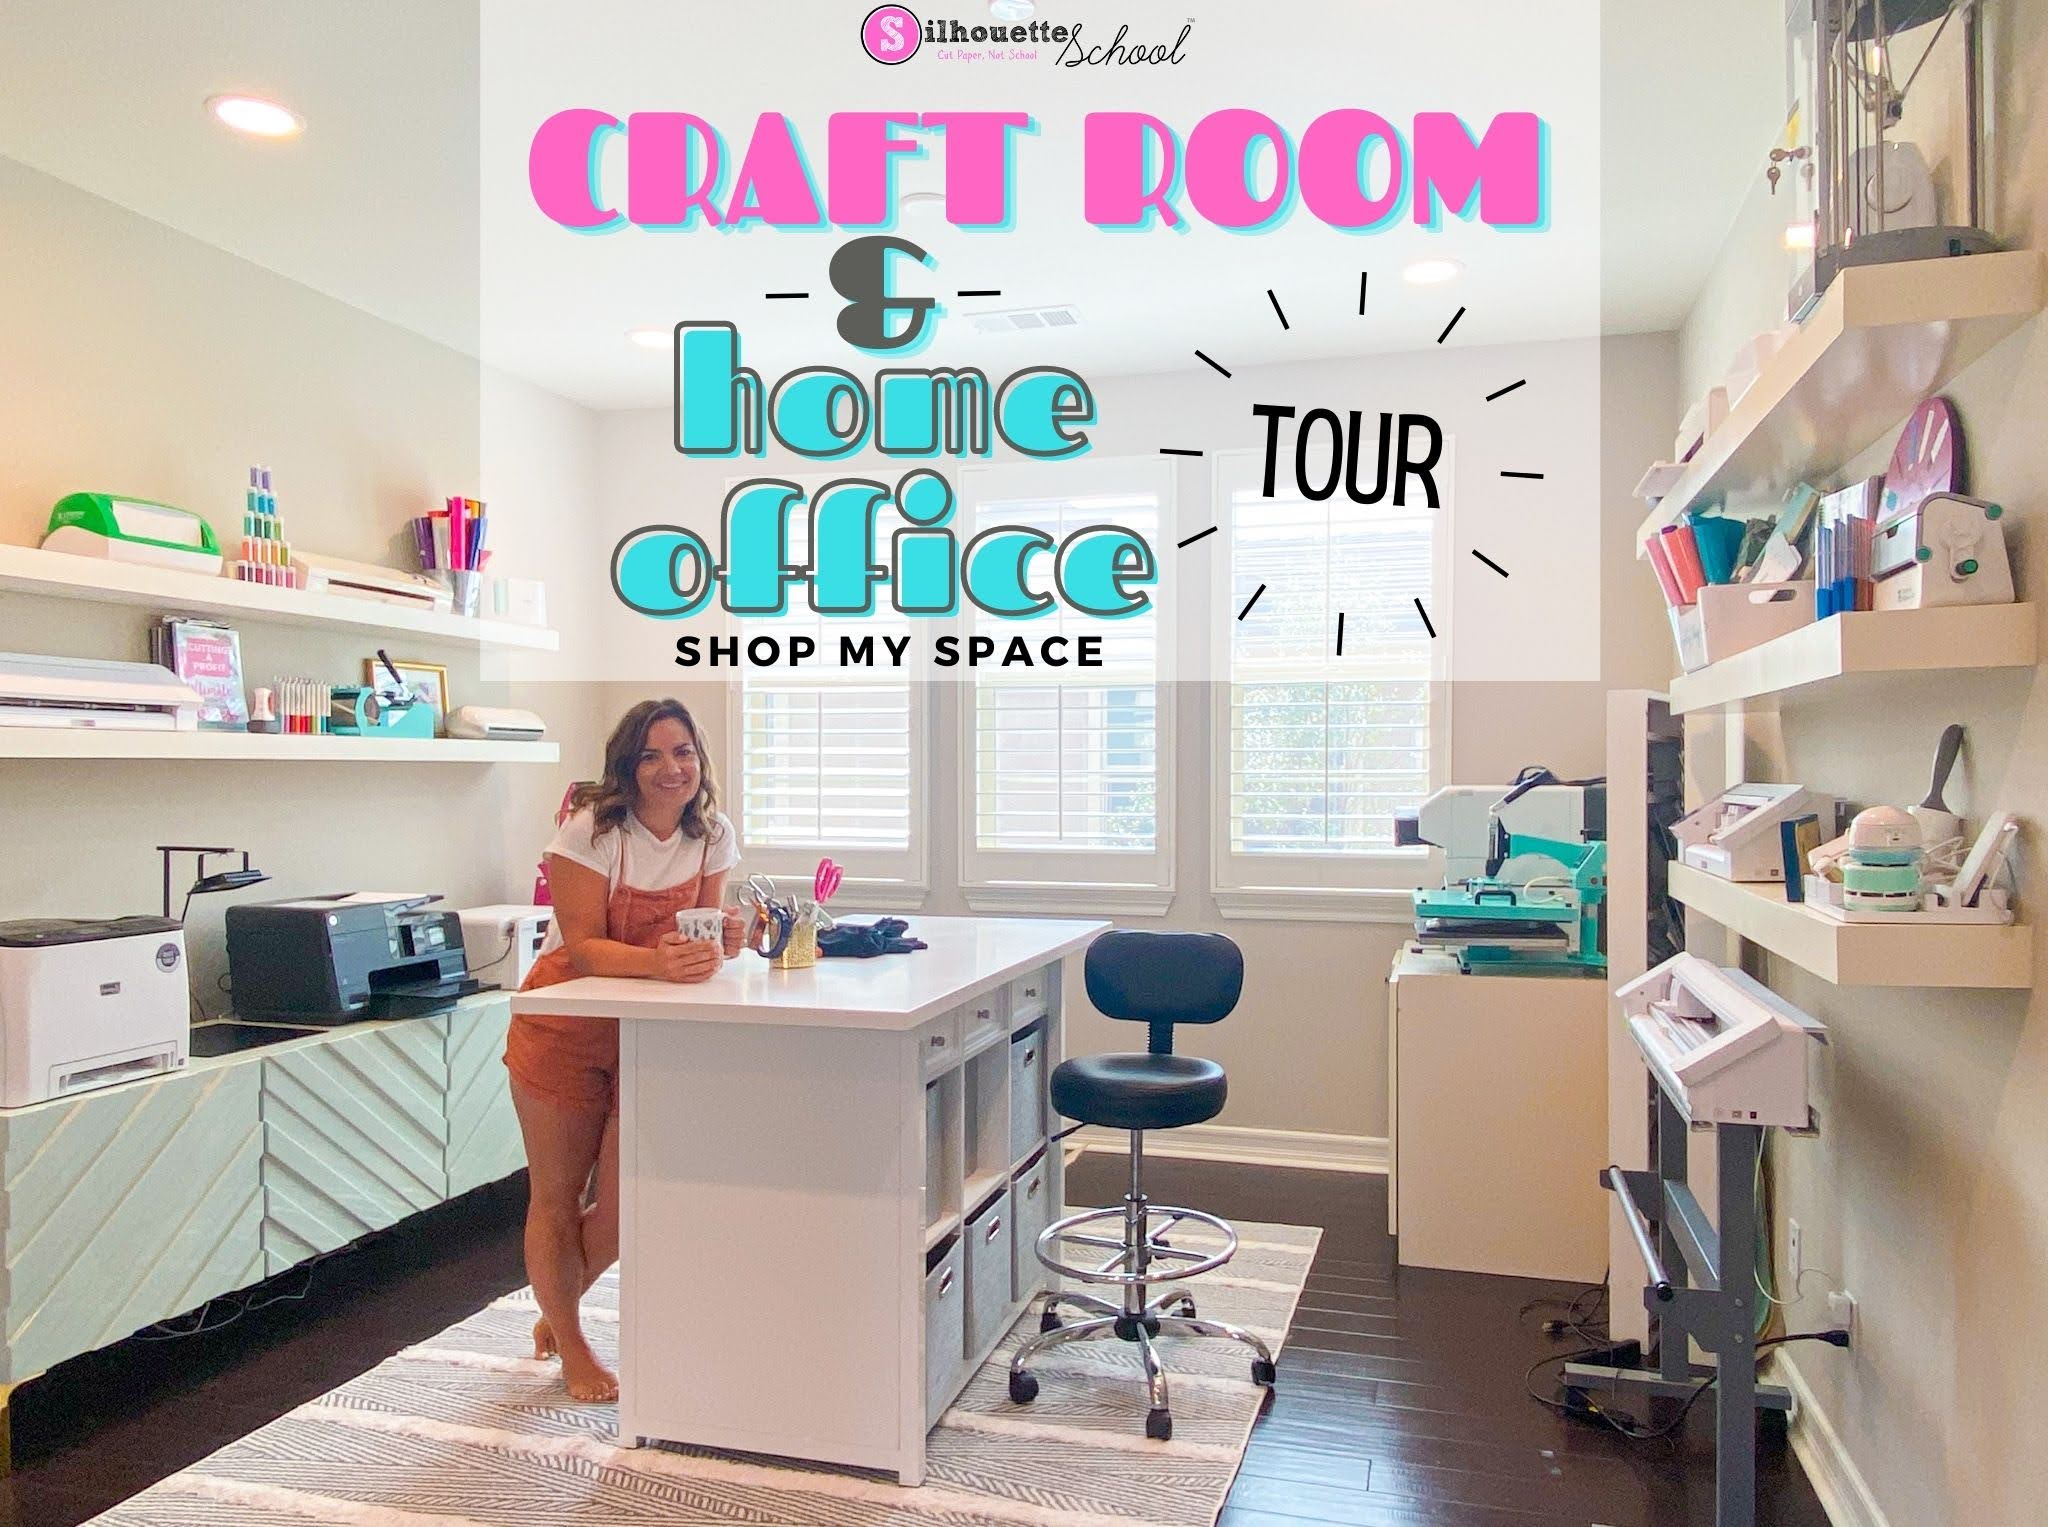  Craft Room Basics - Tall Sticker Organizer - White